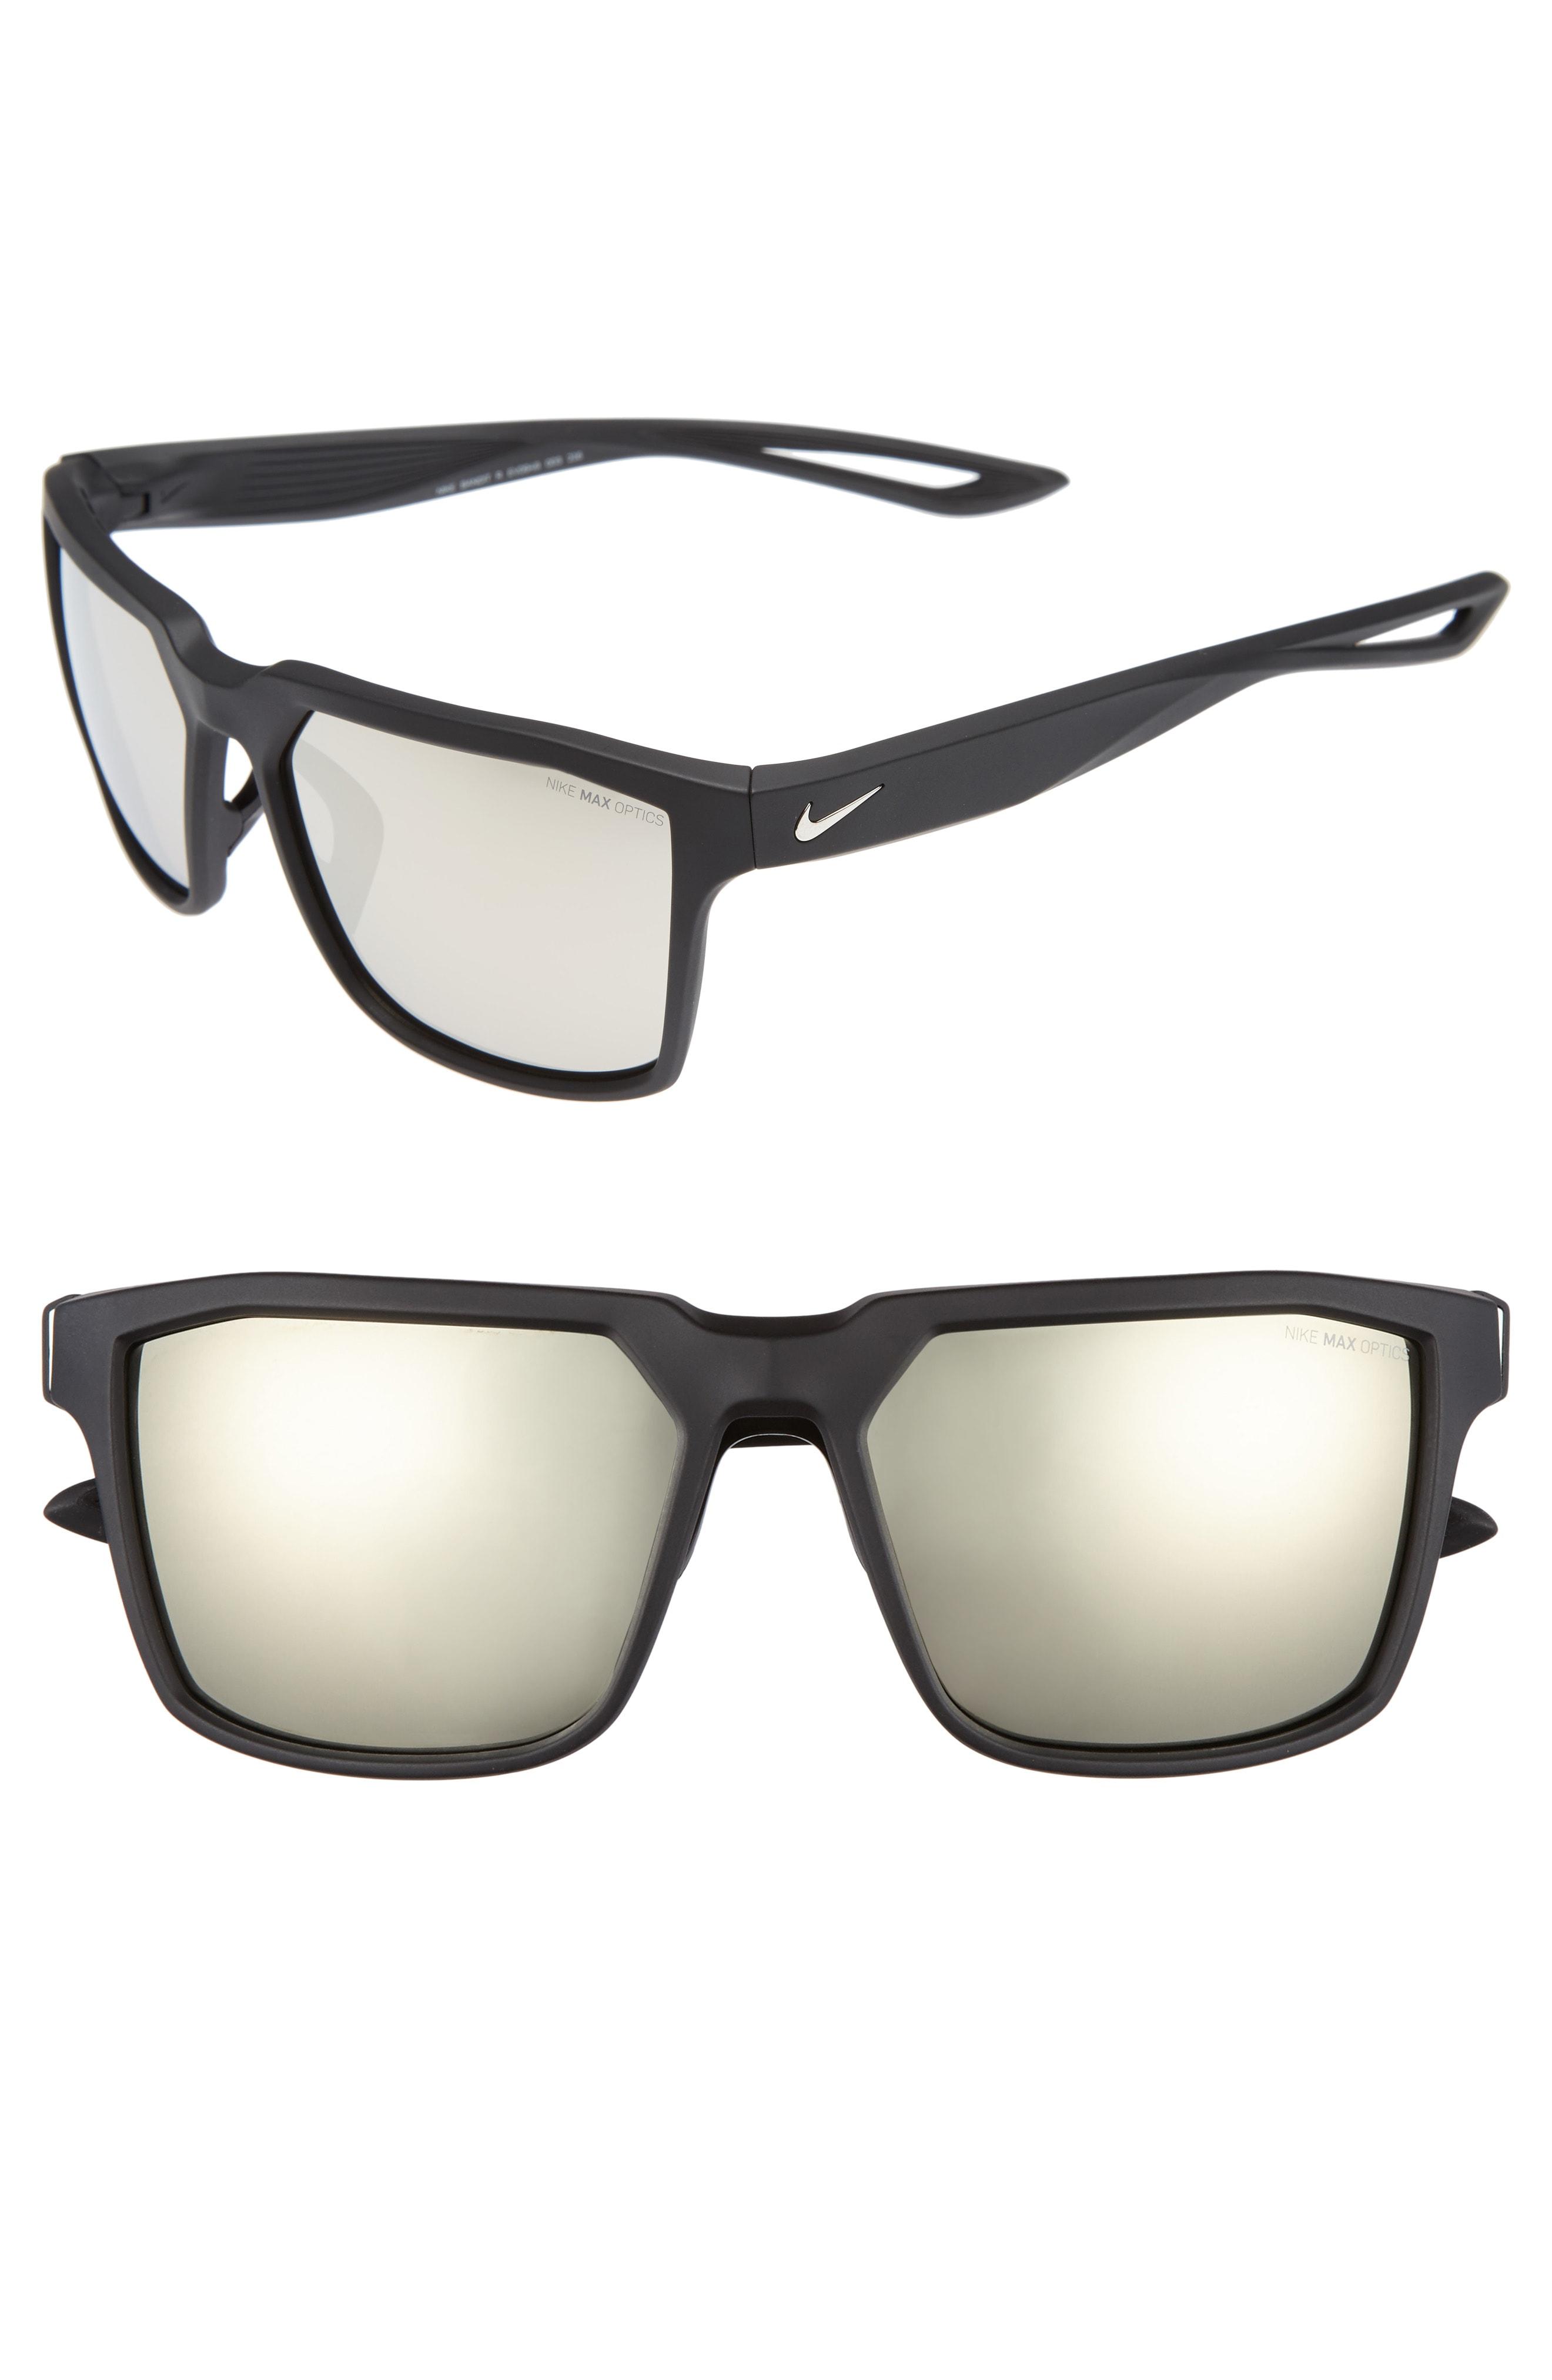 Nike Bandit R 59mm Sunglasses In Matte Black Silver Modesens